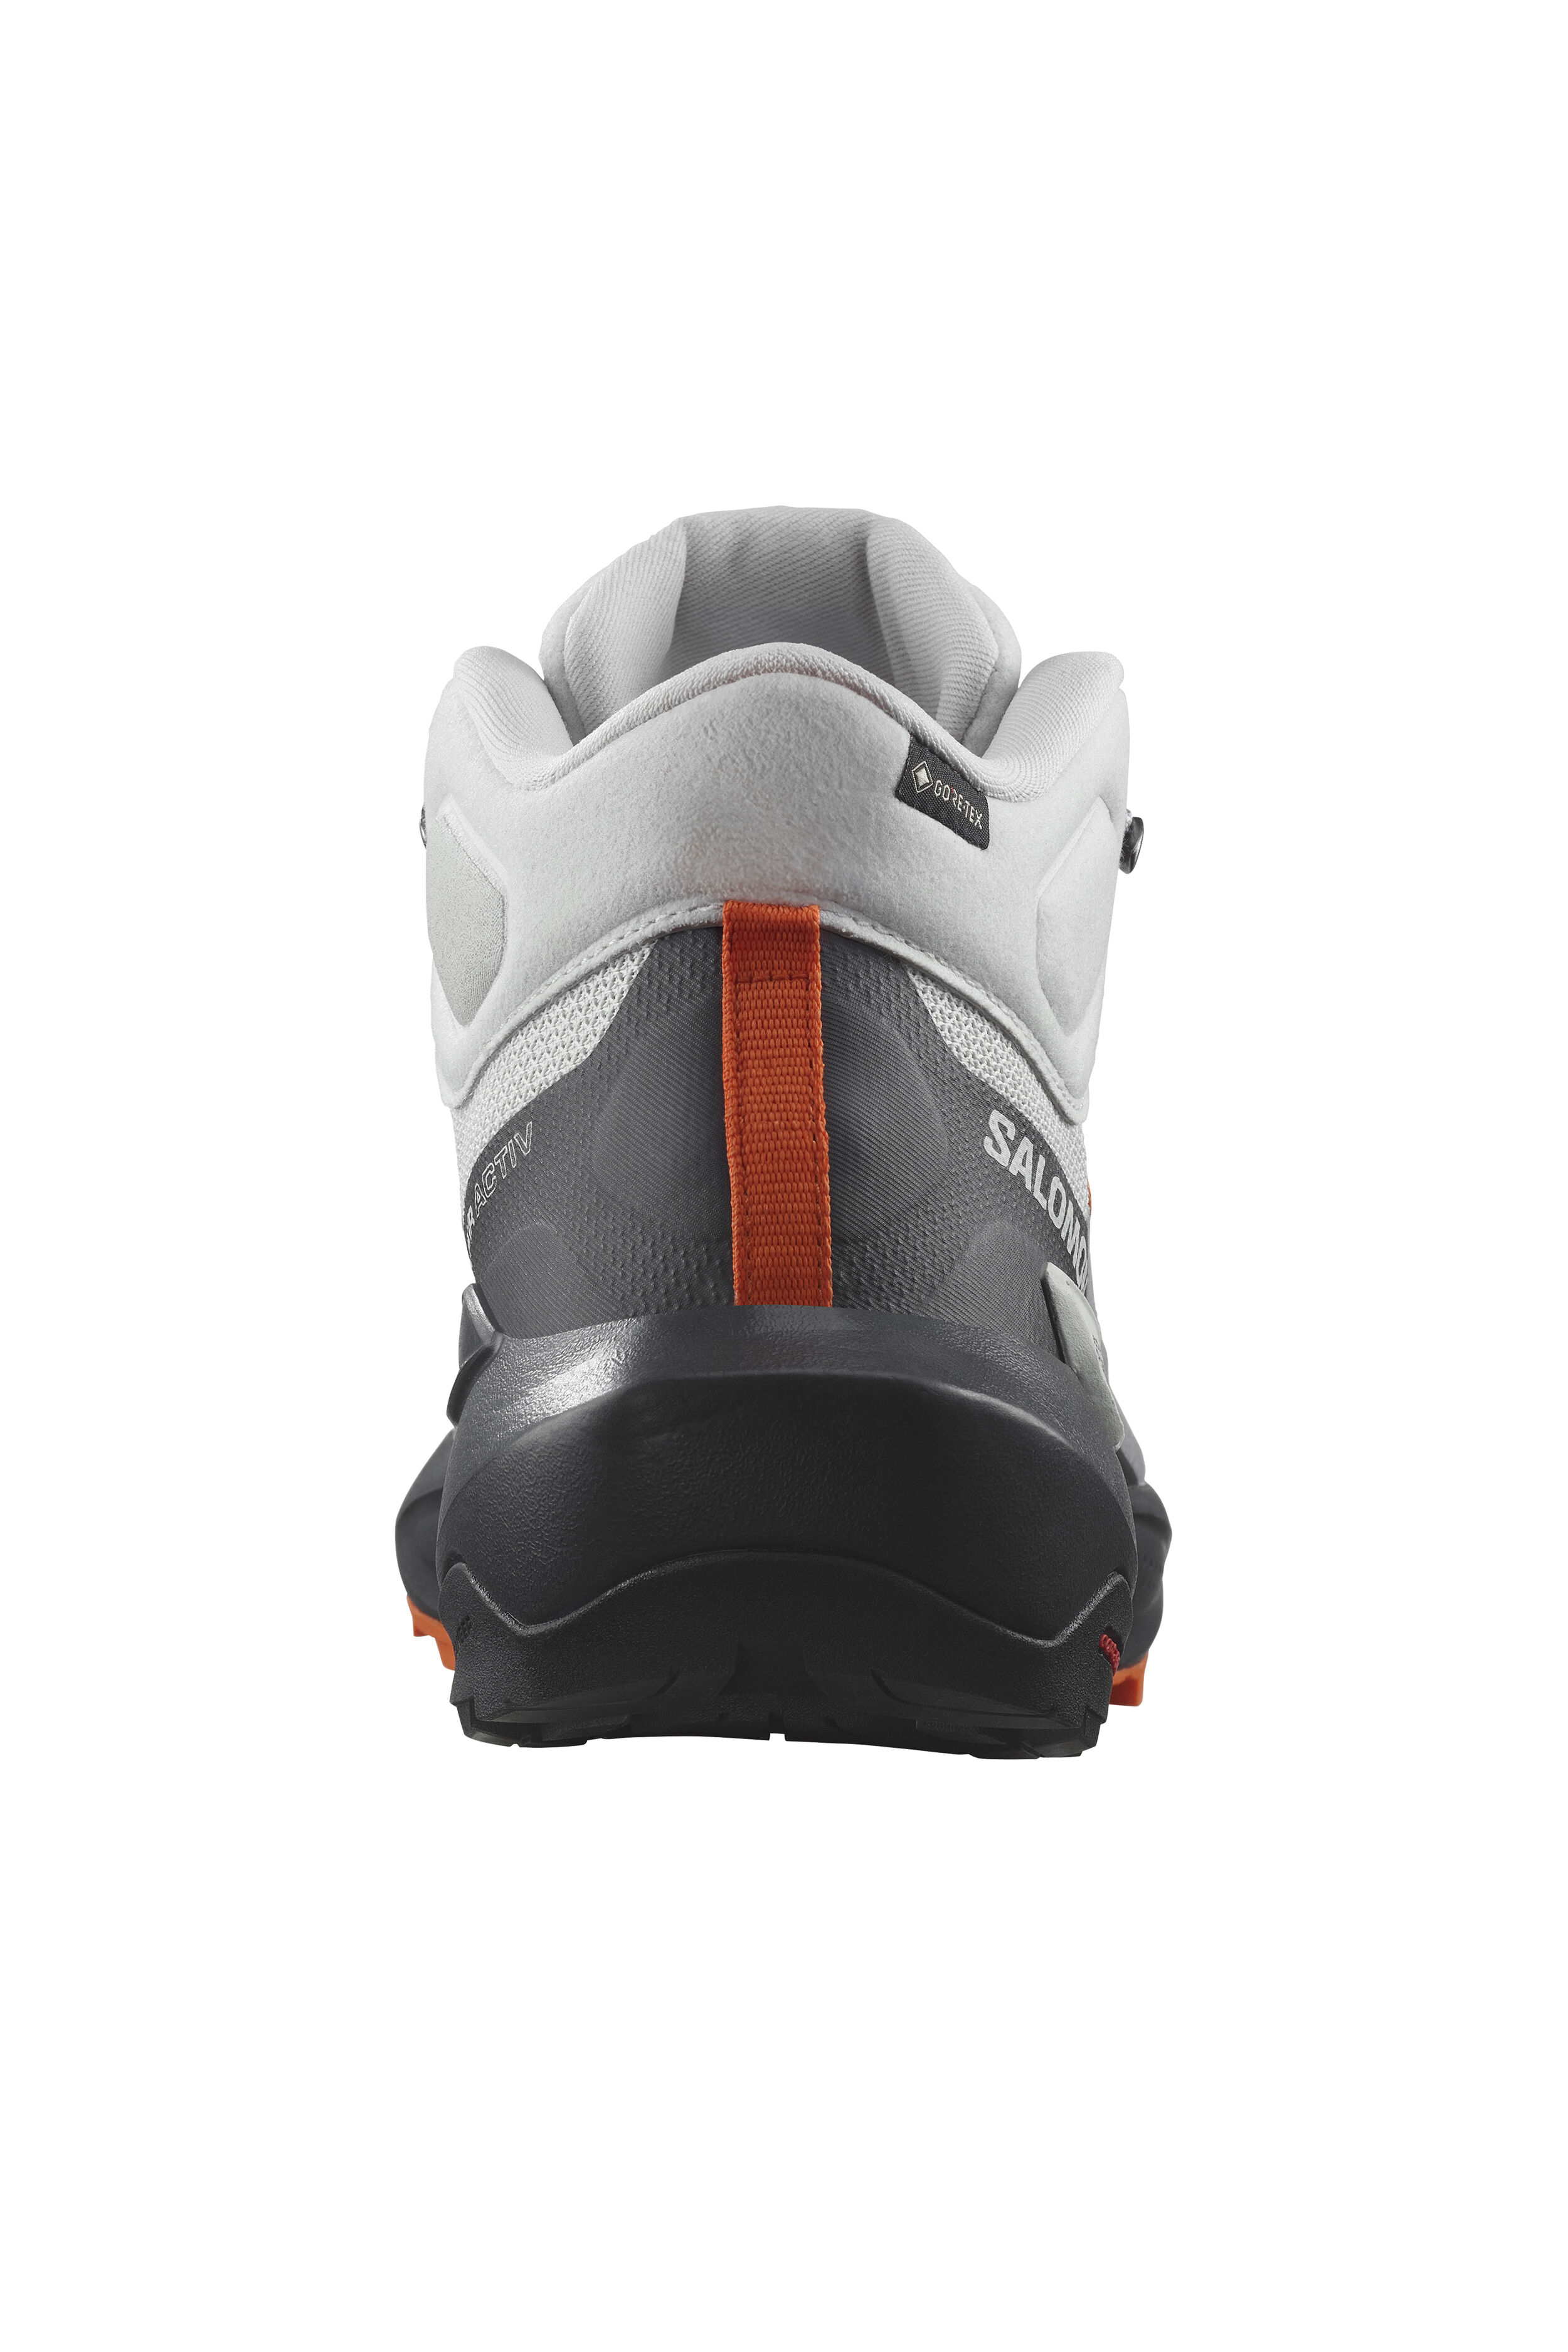 Salomon Men's Elixir Activ Mid GTX Hiking Boots | Macpac